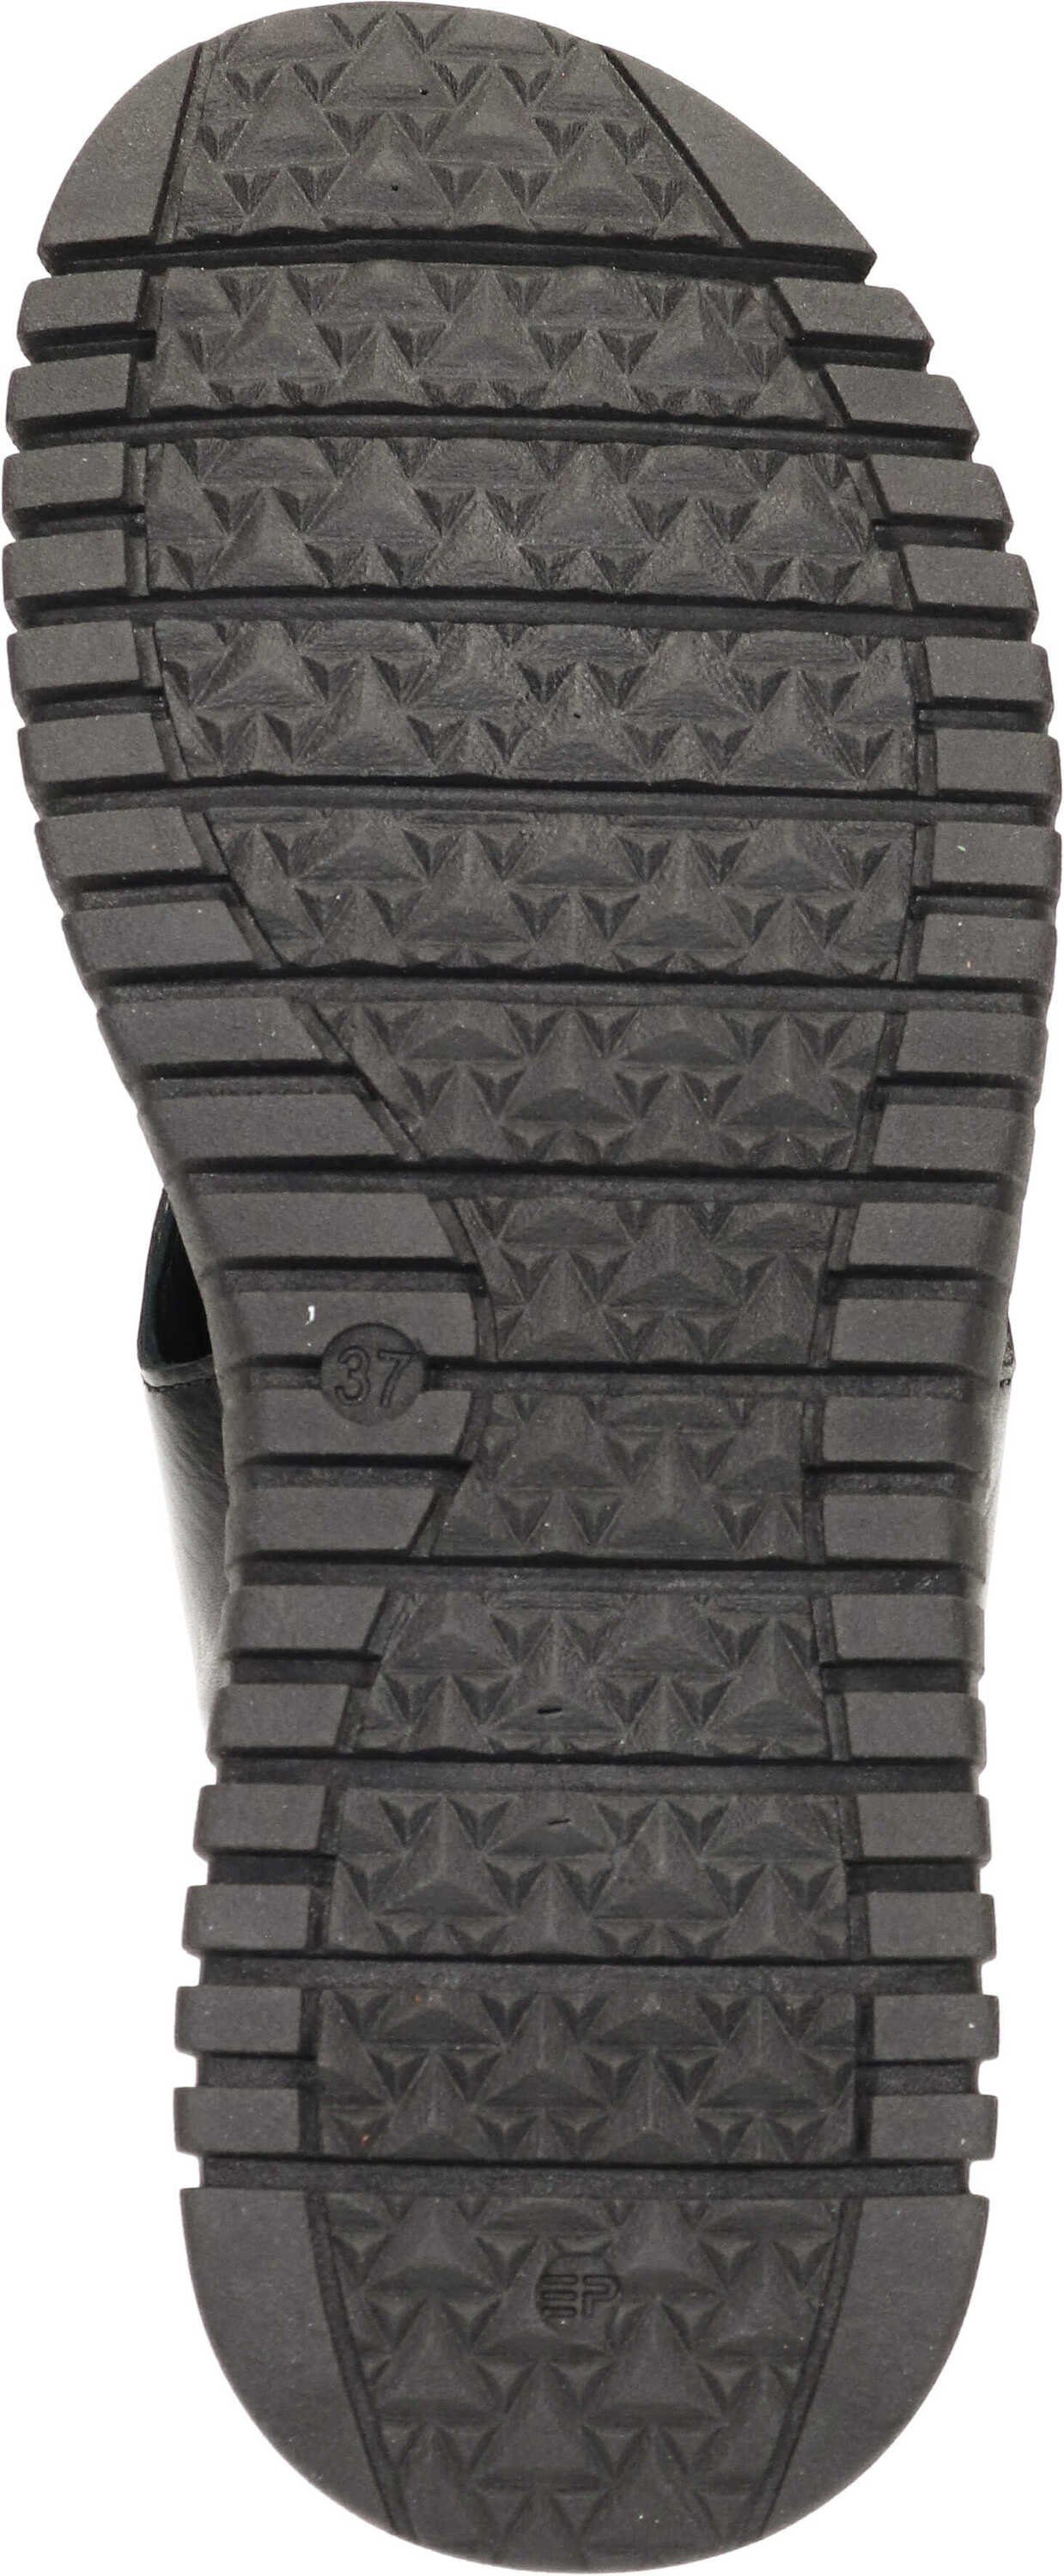 Manitu Sandalen Sandalette aus Leder echtem schwarz